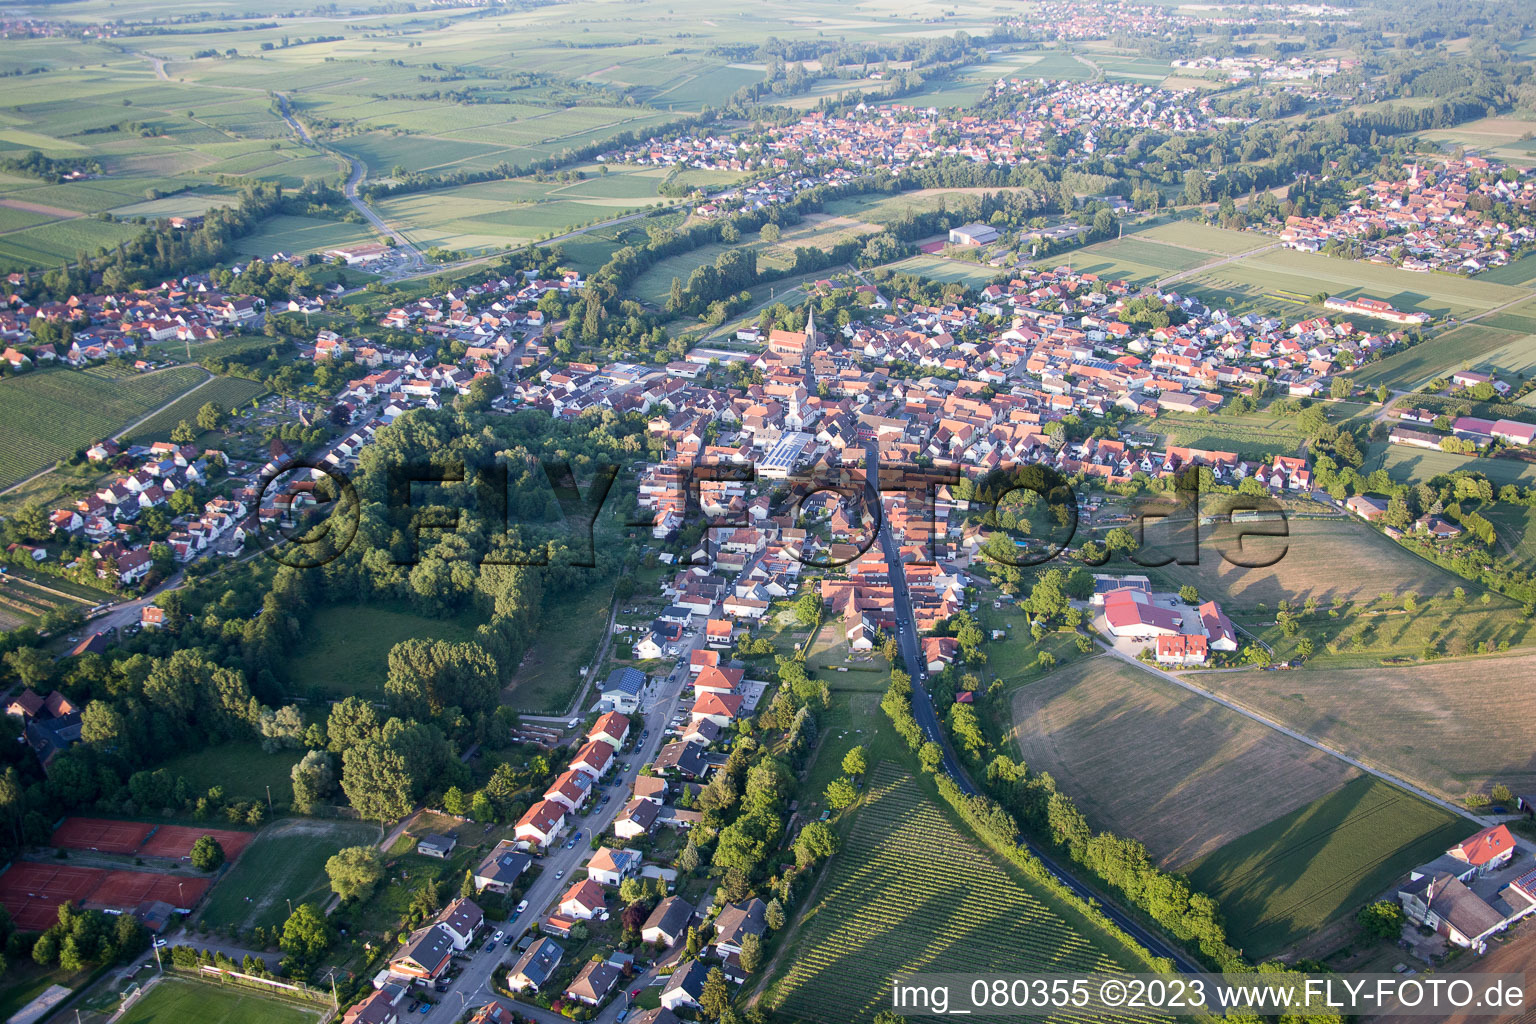 District Ingenheim in Billigheim-Ingenheim in the state Rhineland-Palatinate, Germany seen from a drone